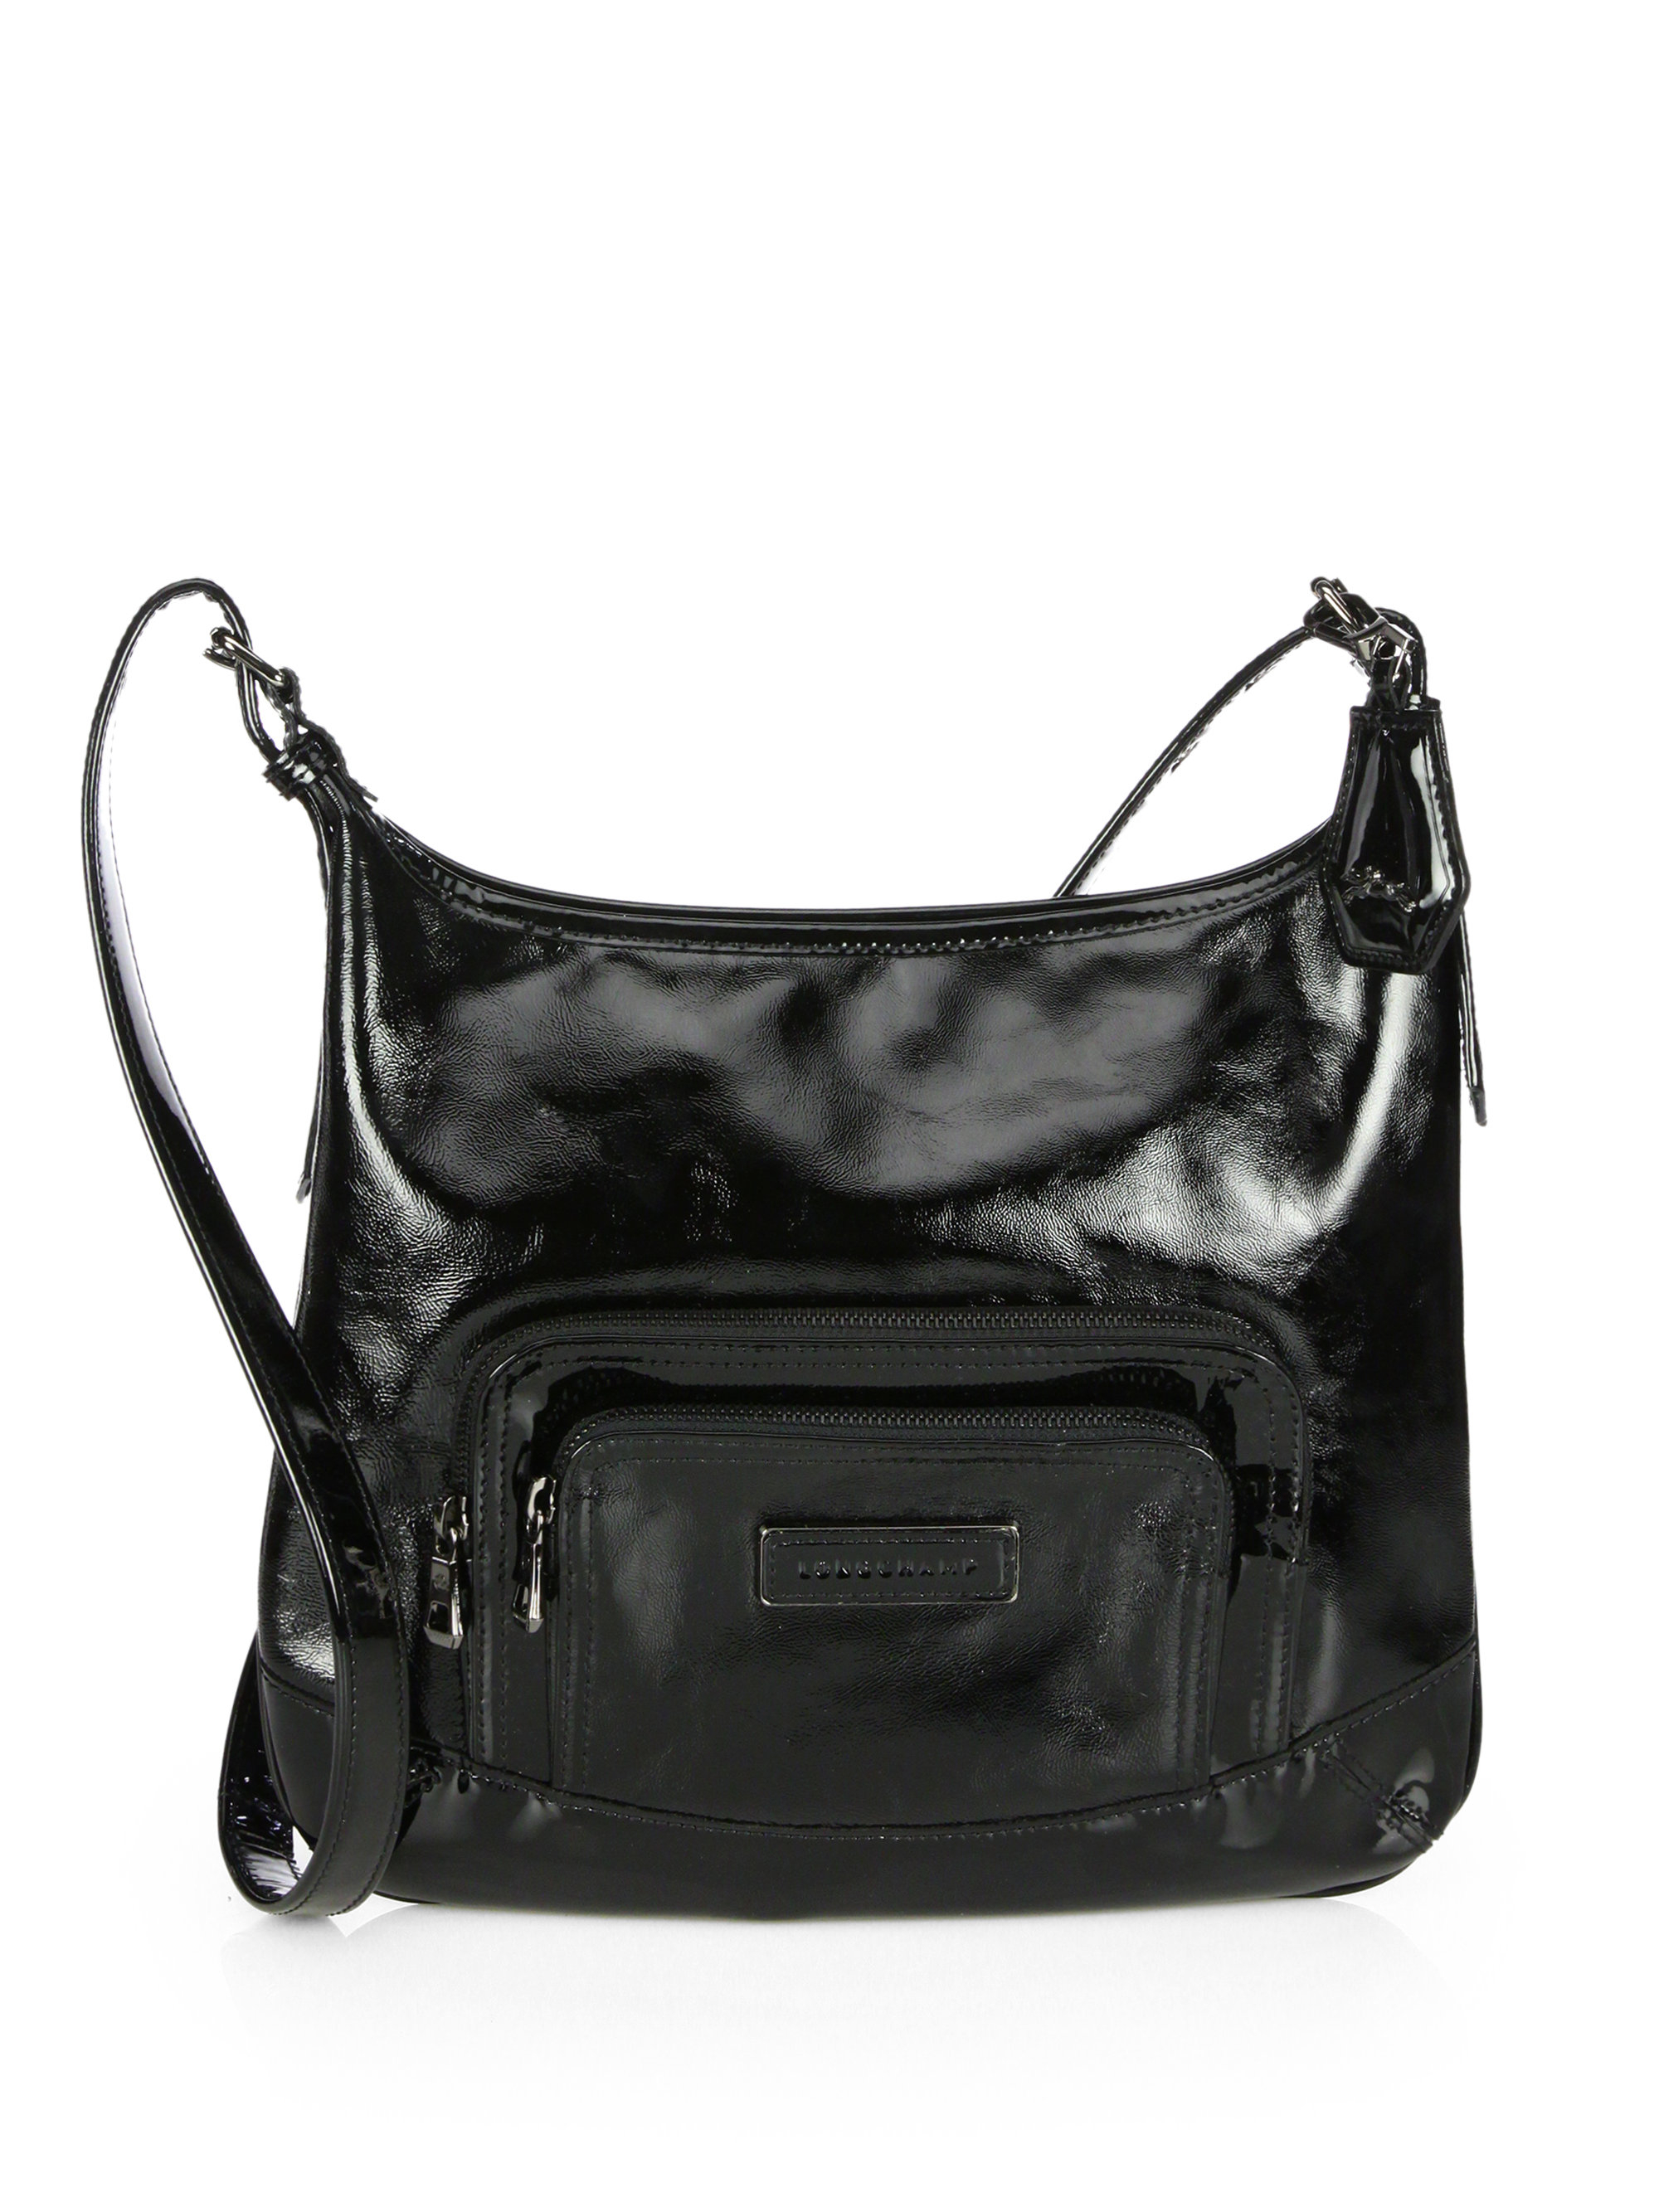 Longchamp Legende Verni Patent Leather Crossbody Bag in Black | Lyst